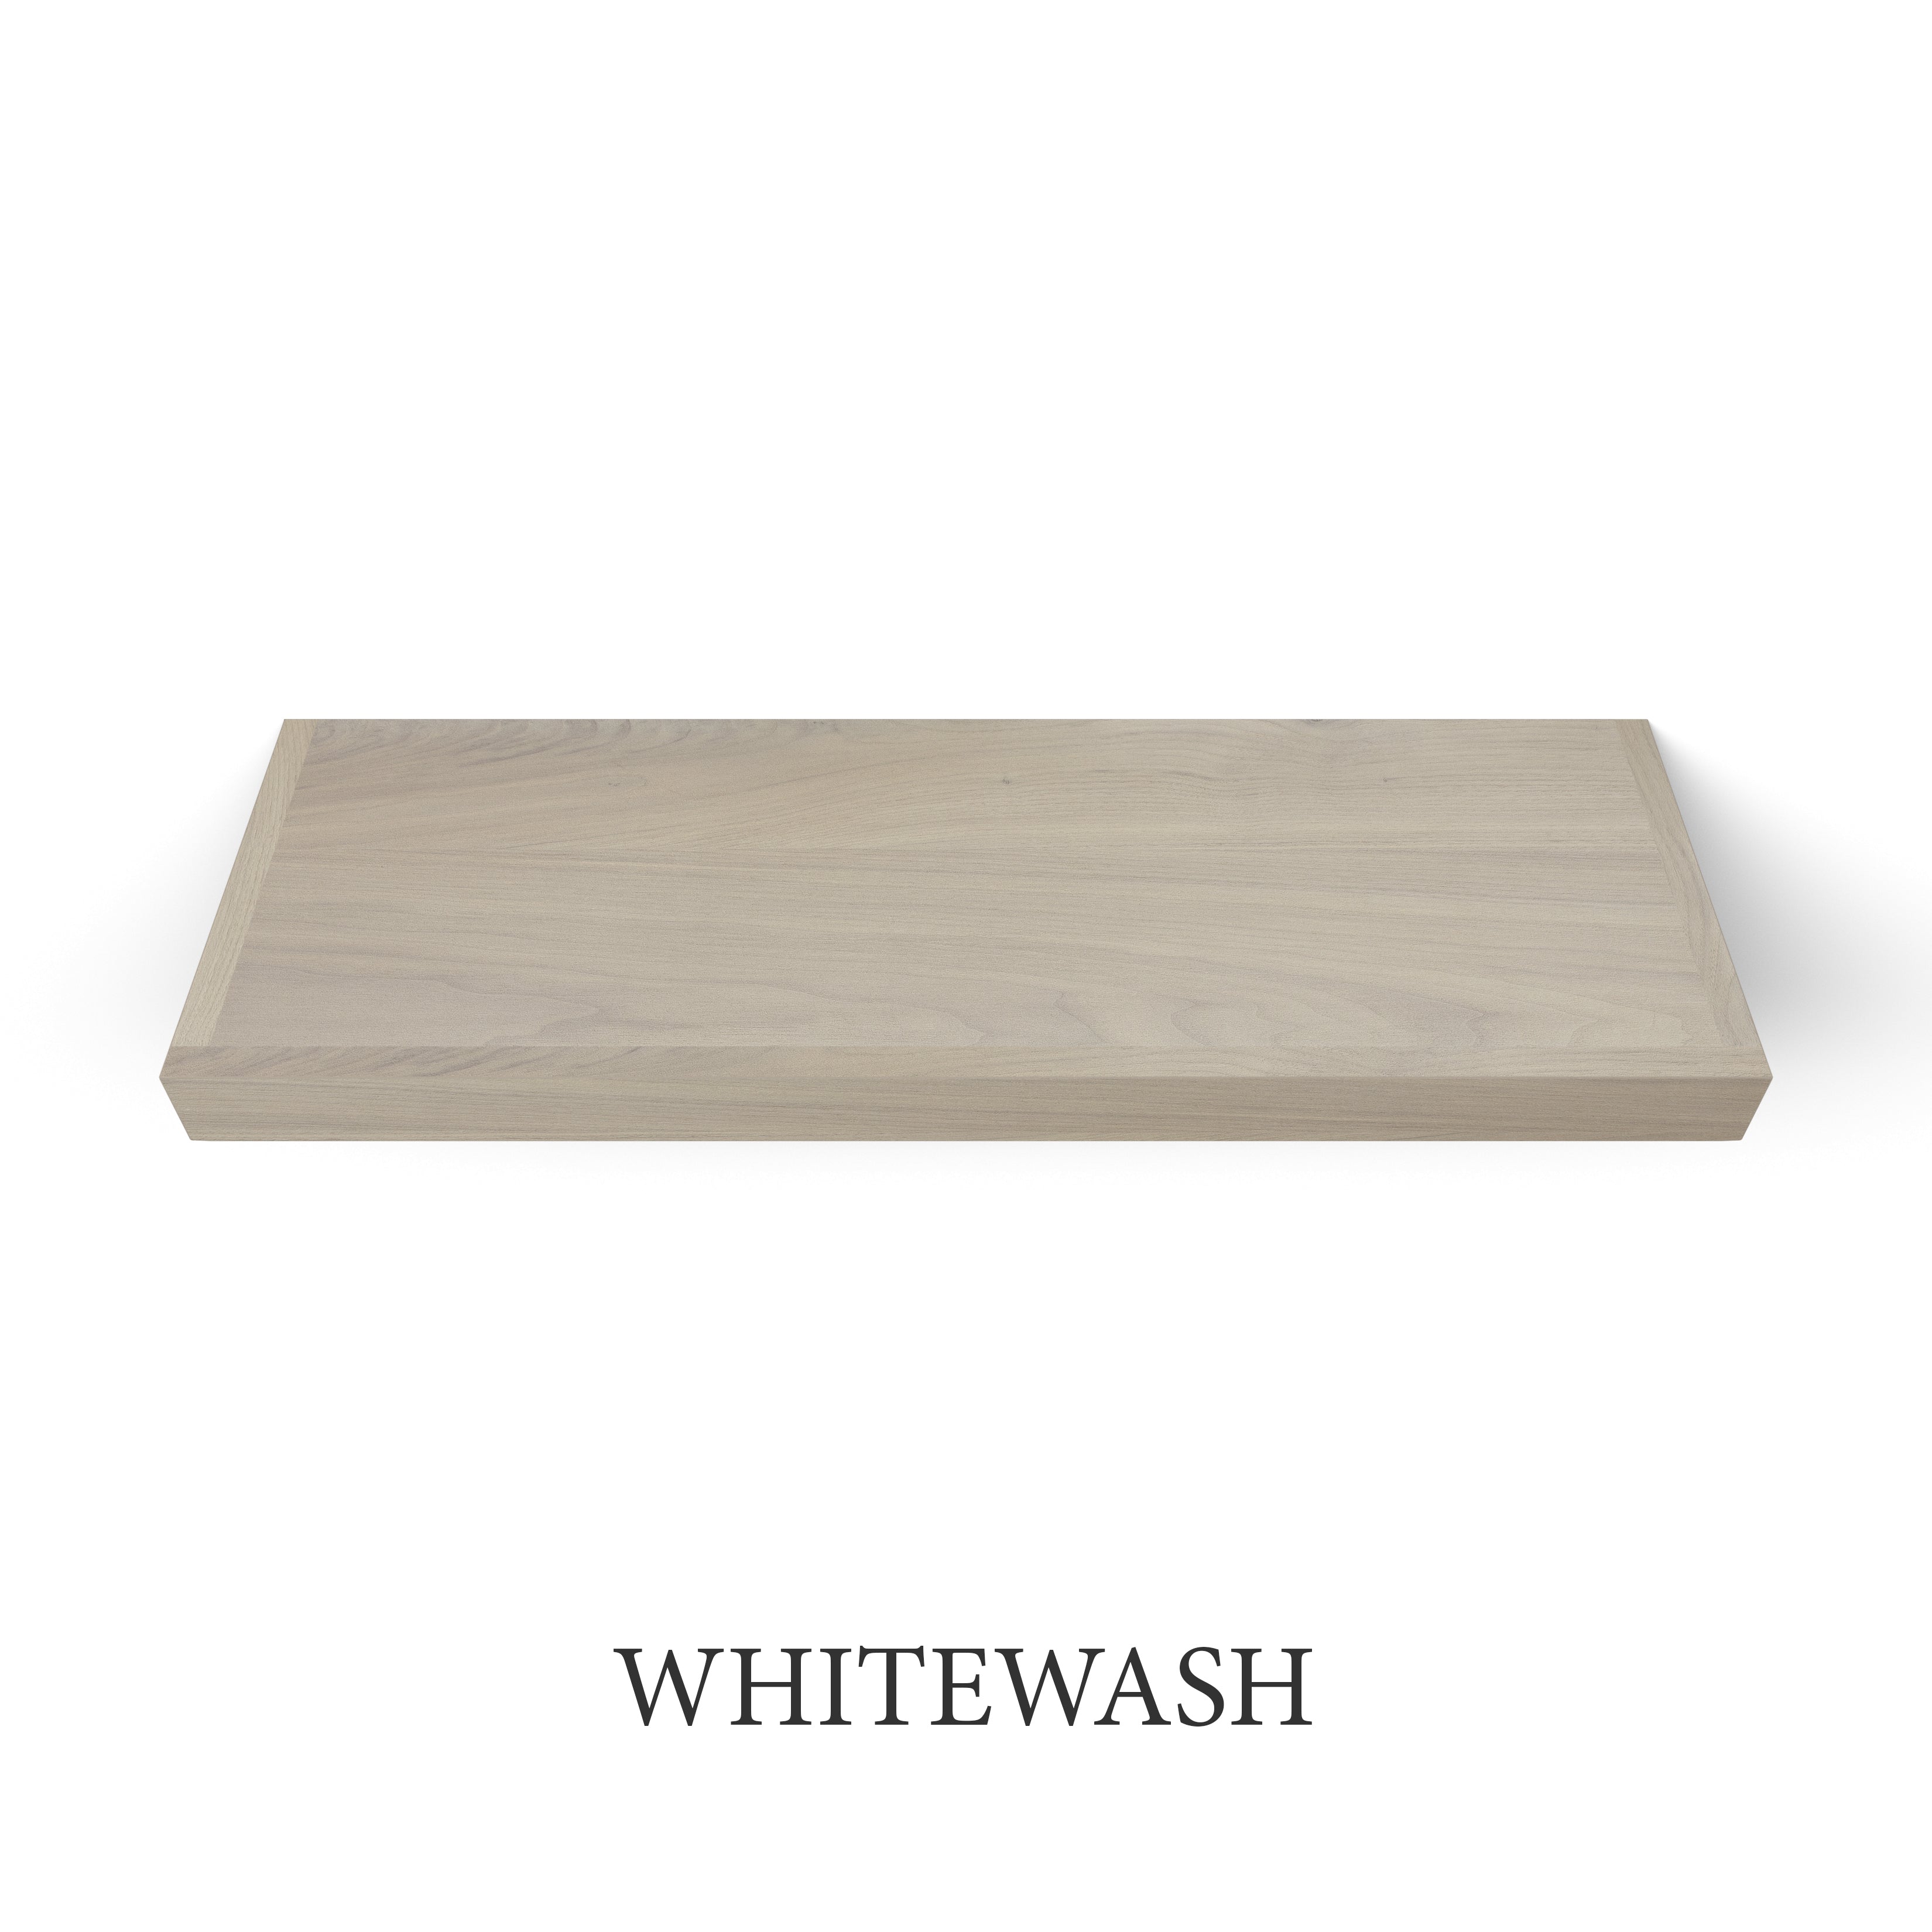 whitewash Walnut 2 Inch Thick Floating Shelf